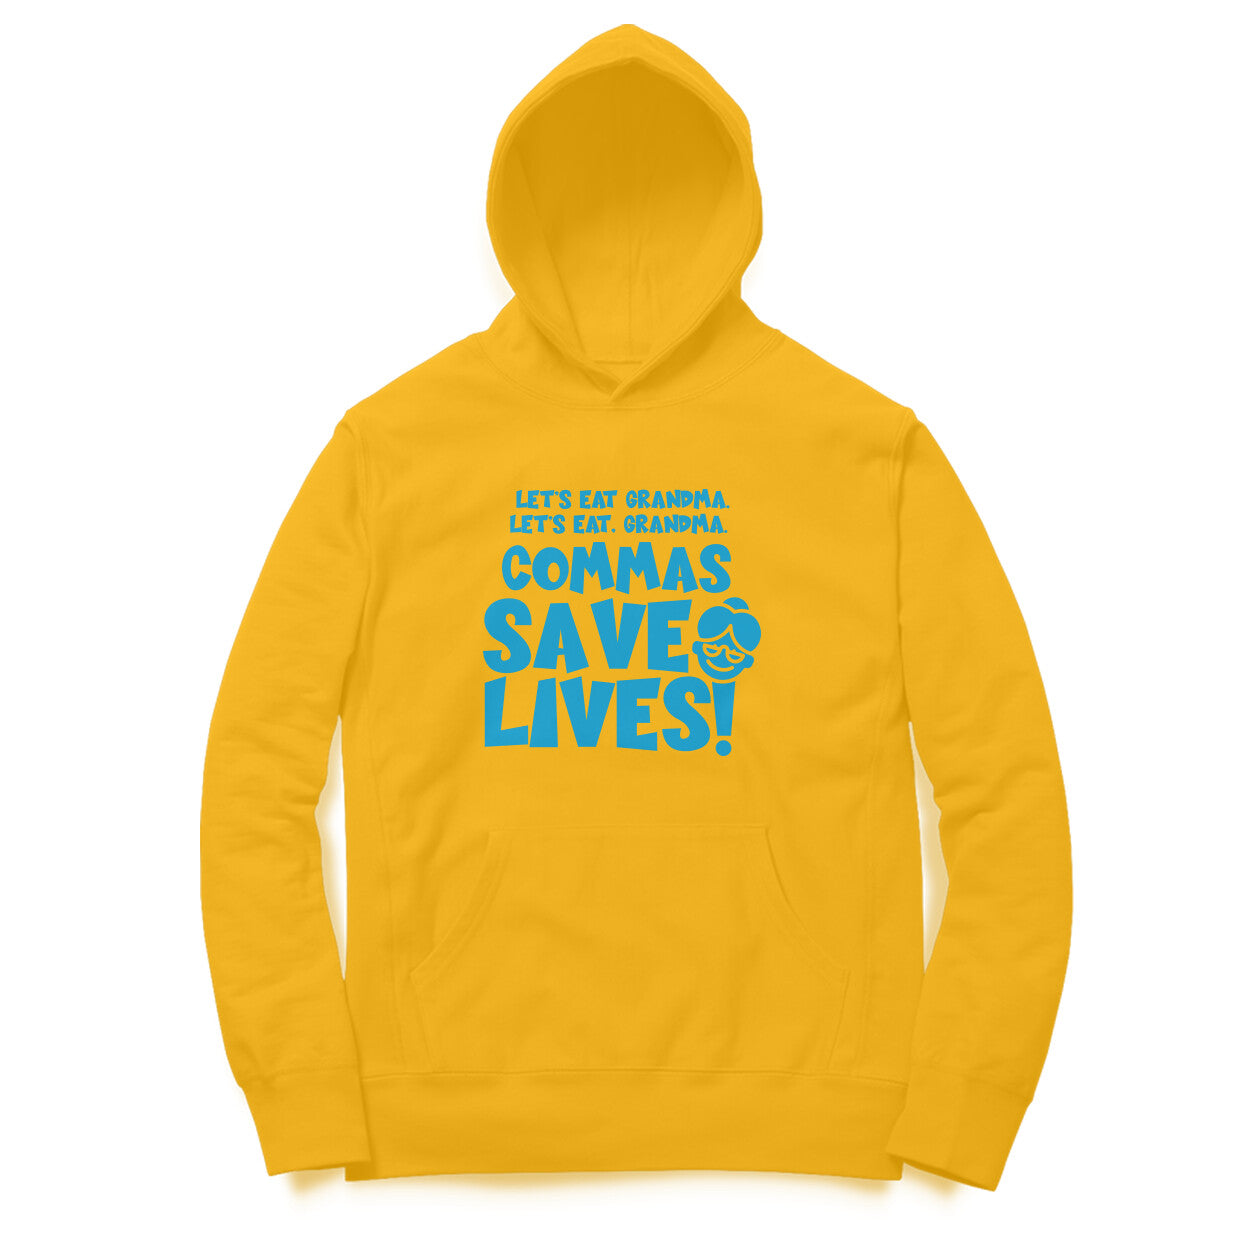 Commas save lives - Unisex Heavy Blend Hoodies